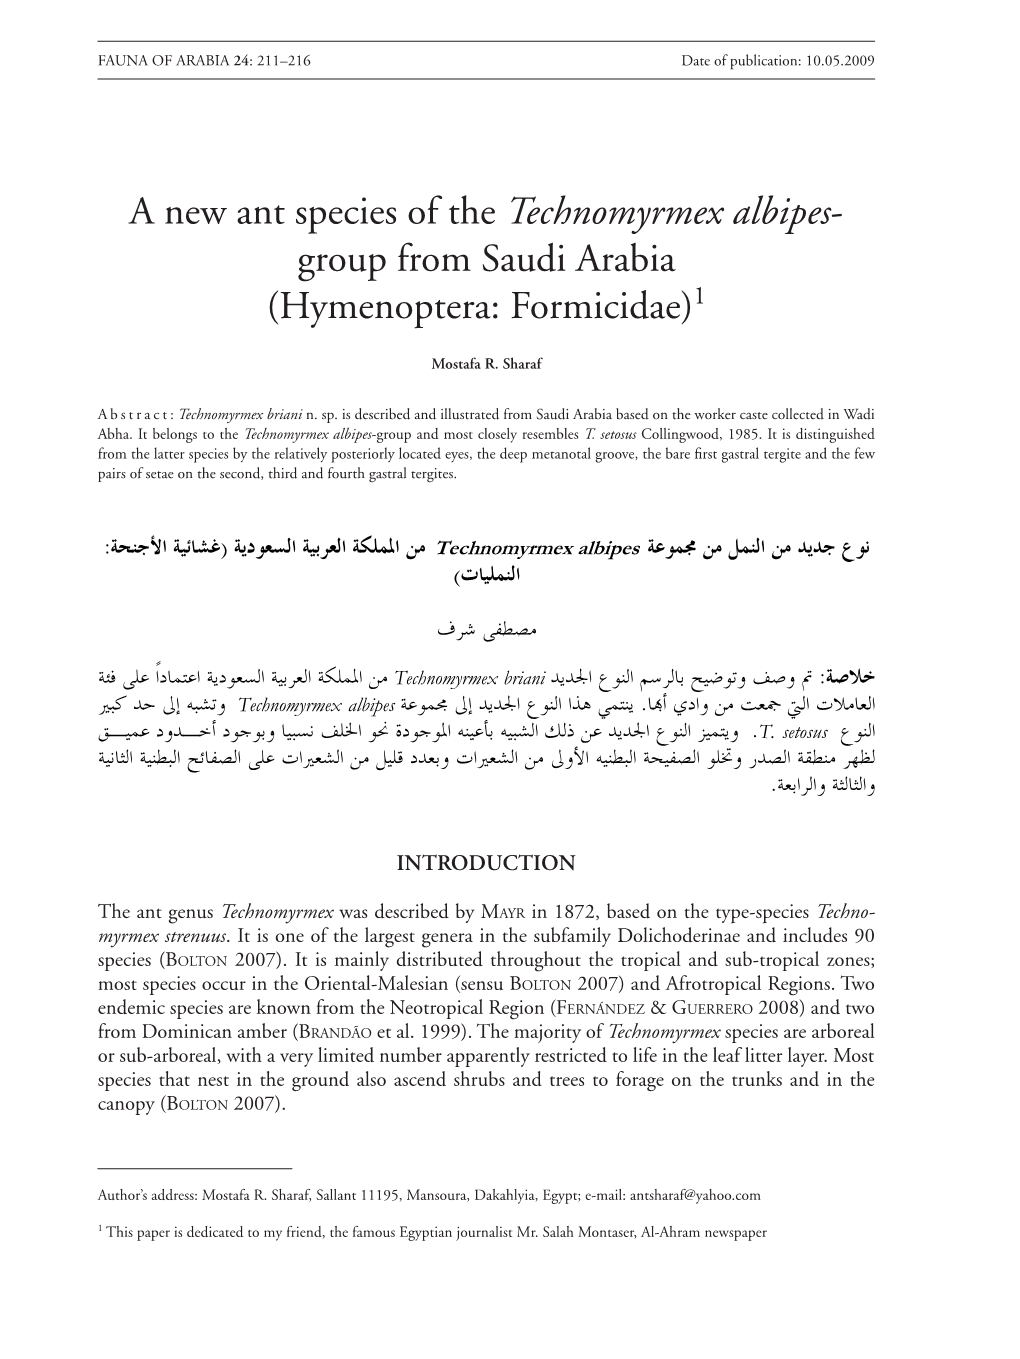 A New Ant Species of the Technomyrmex Albipes- Group from Saudi Arabia 1 Sharaf: Technomyrmex(Hymenoptera: Formicidae)